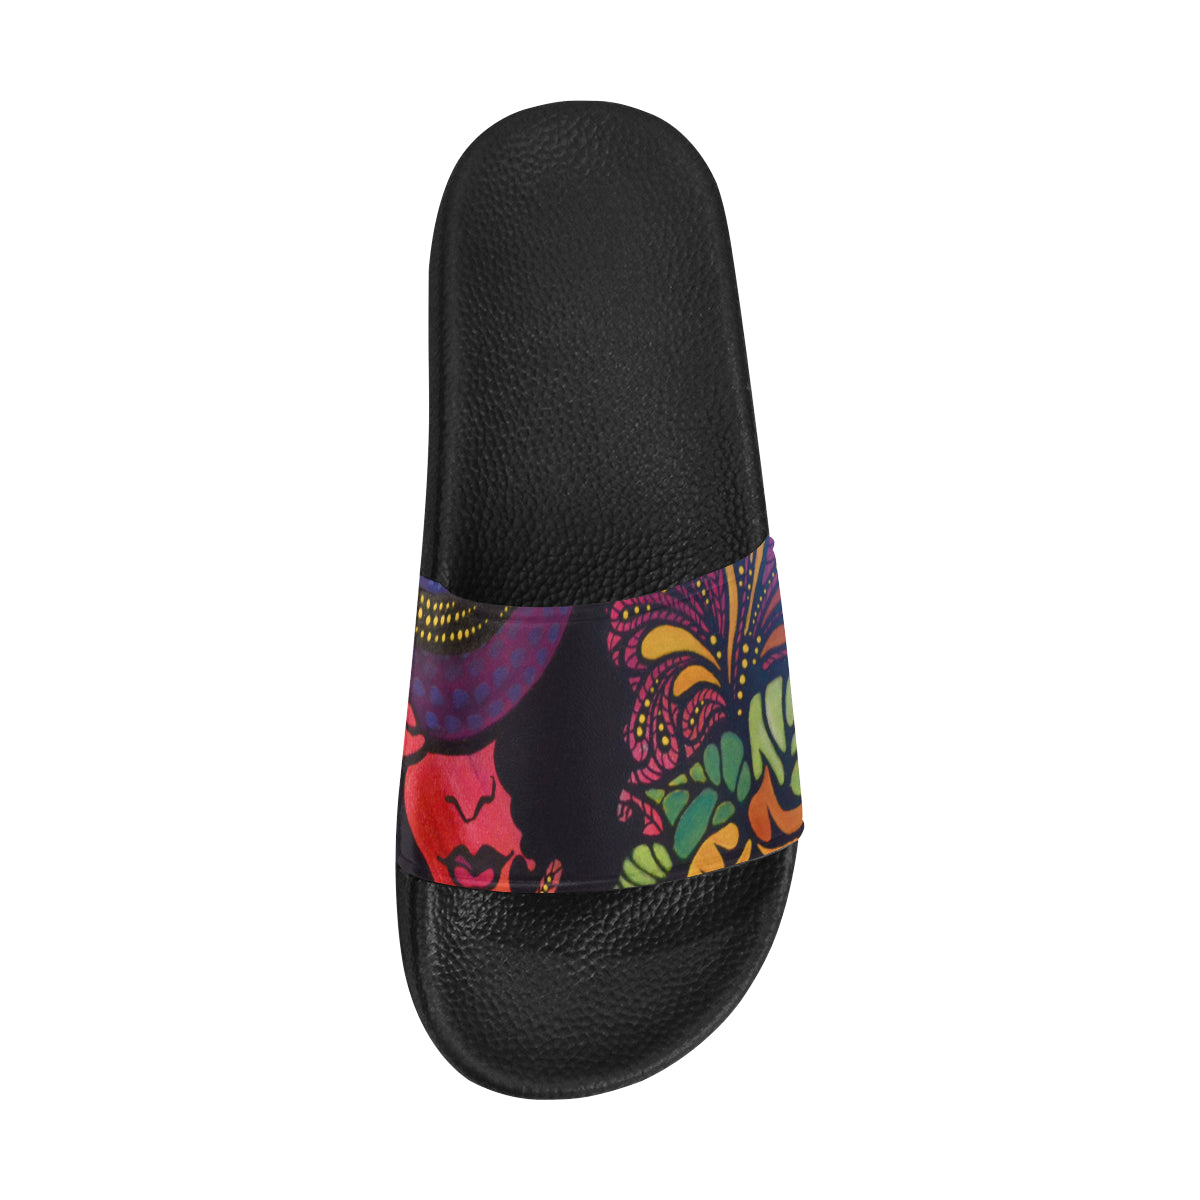 Chola Women's Slide Sandals